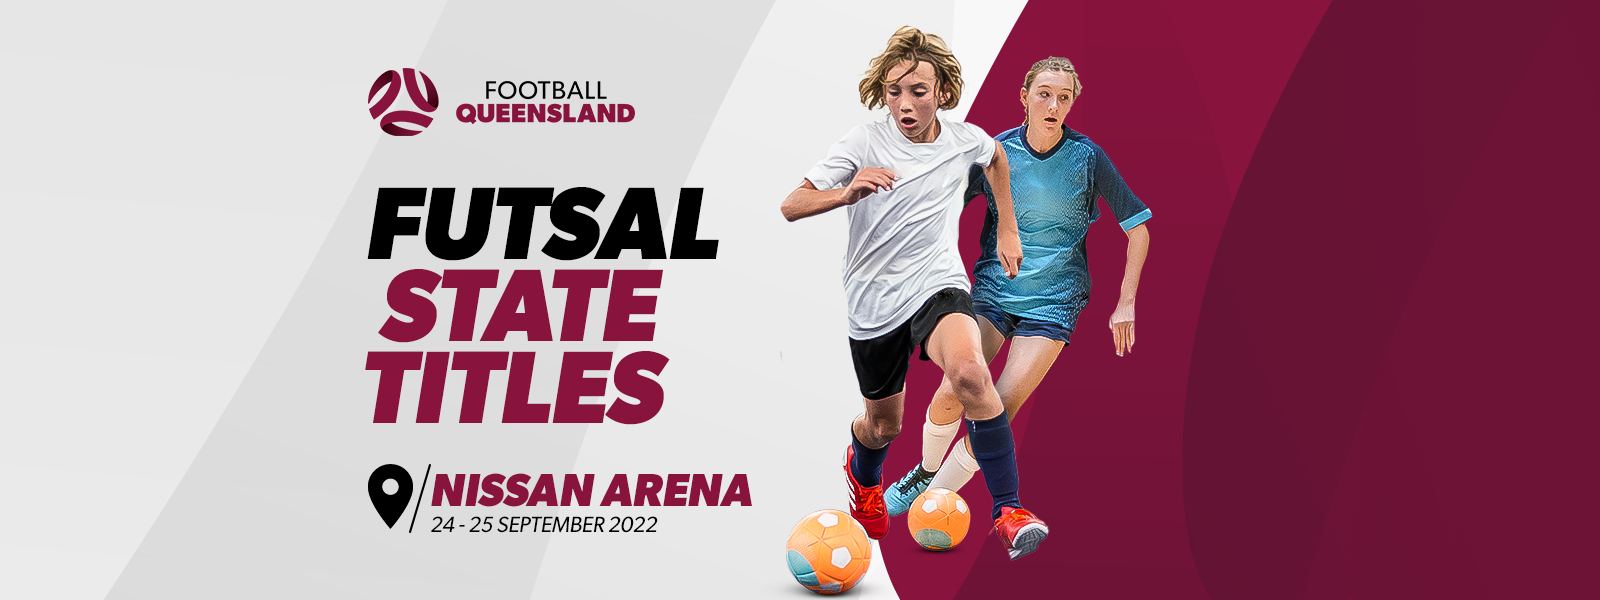 Football Queensland Confirms Details Of 2022 Fq Futsal State Titles Football Queensland